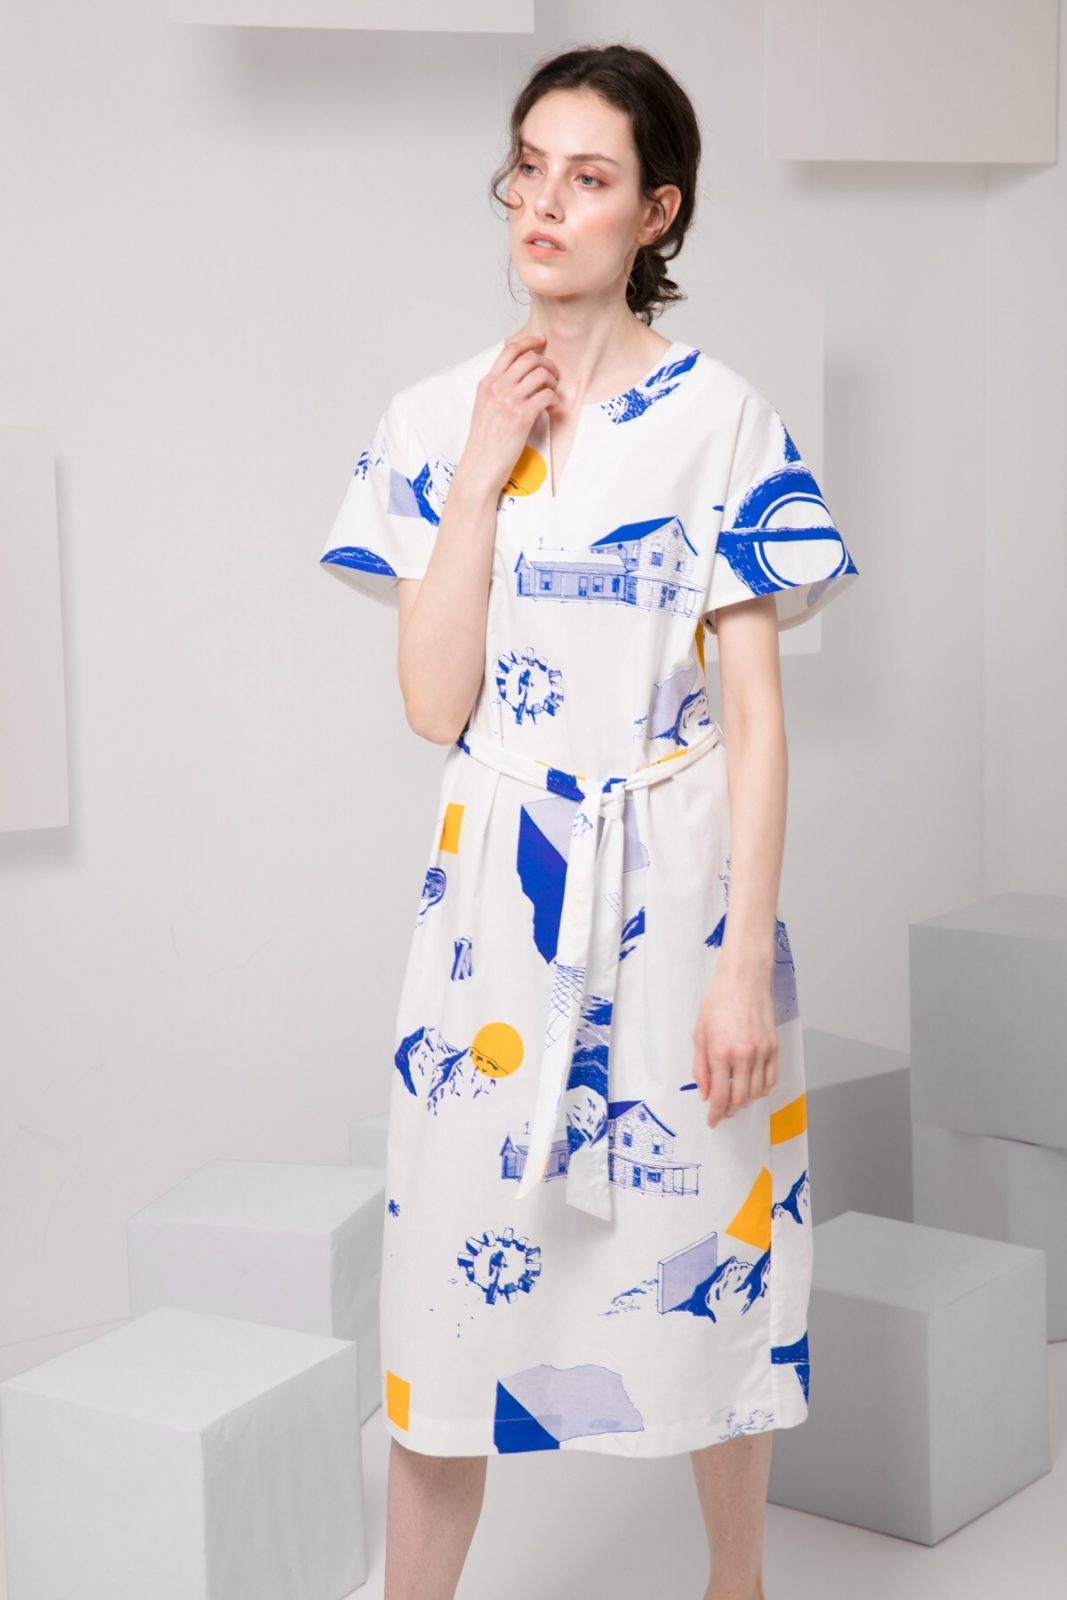 SKYE modern minimalist women clothing fashion Lois Dress interstellar 3